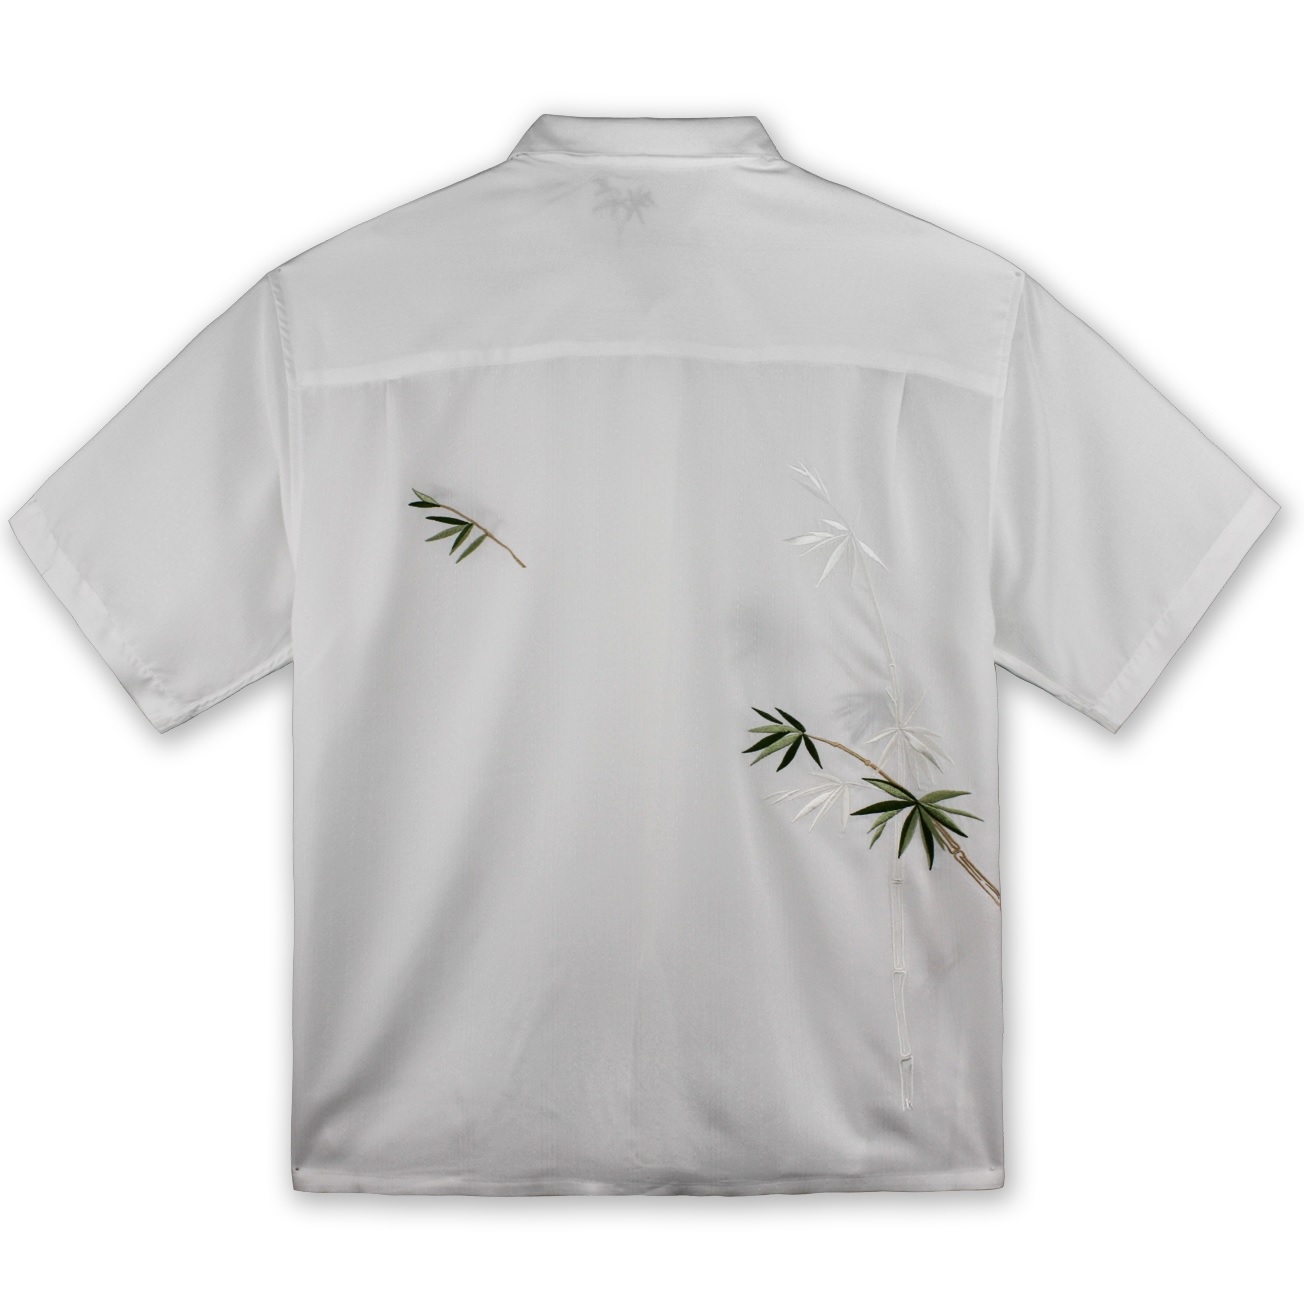 Bamboo Cay Shirt - Flying Bamboo White